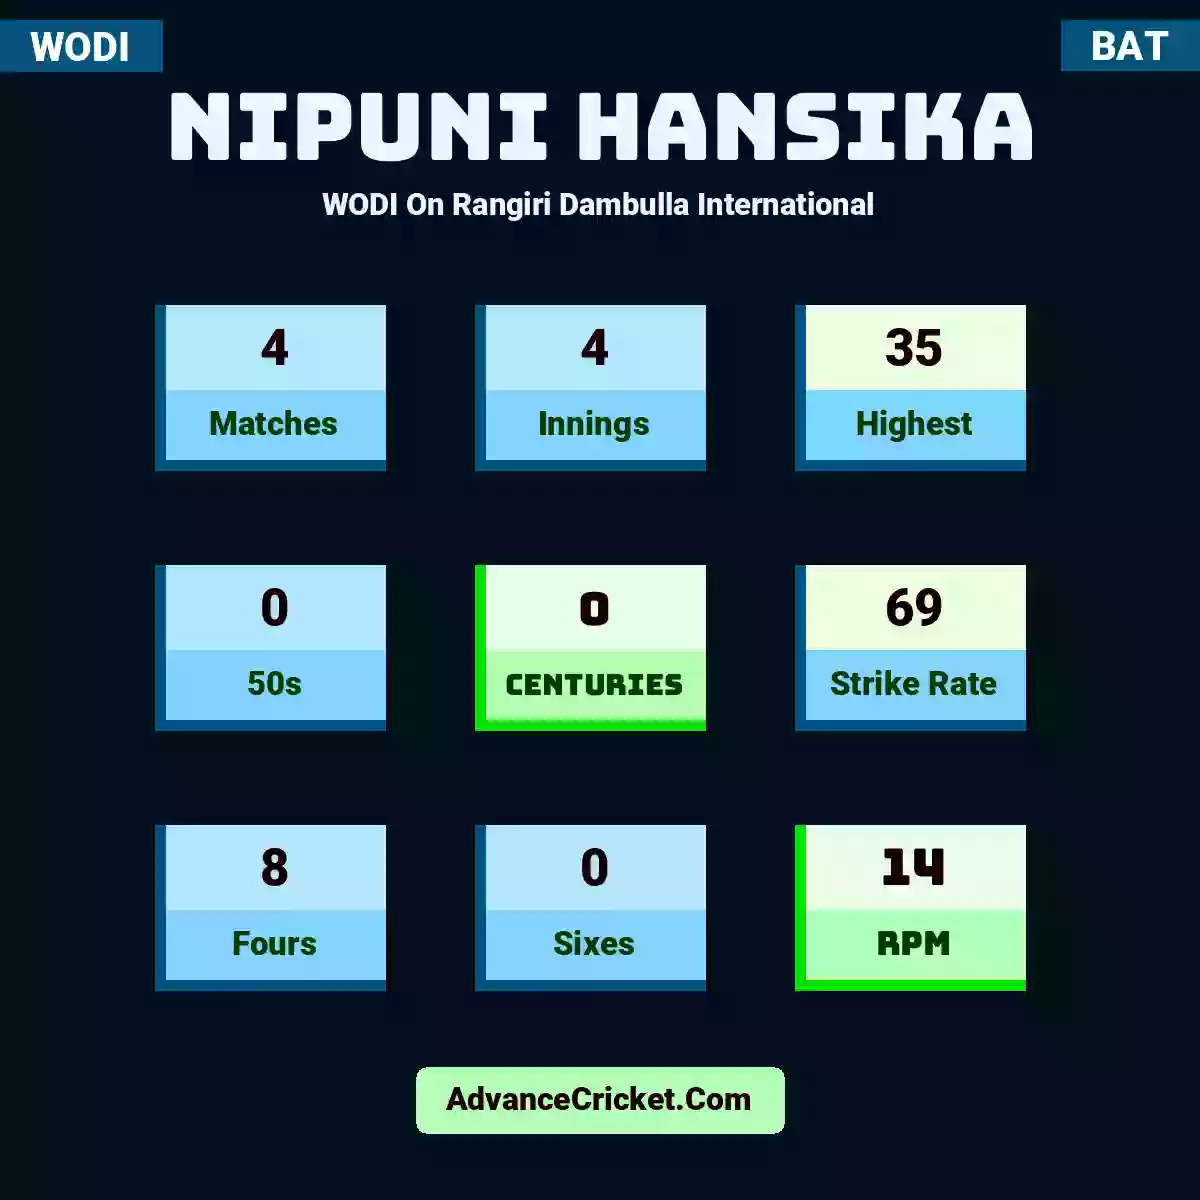 Nipuni Hansika WODI  On Rangiri Dambulla International, Nipuni Hansika played 4 matches, scored 35 runs as highest, 0 half-centuries, and 0 centuries, with a strike rate of 69. N.Hansika hit 8 fours and 0 sixes, with an RPM of 14.